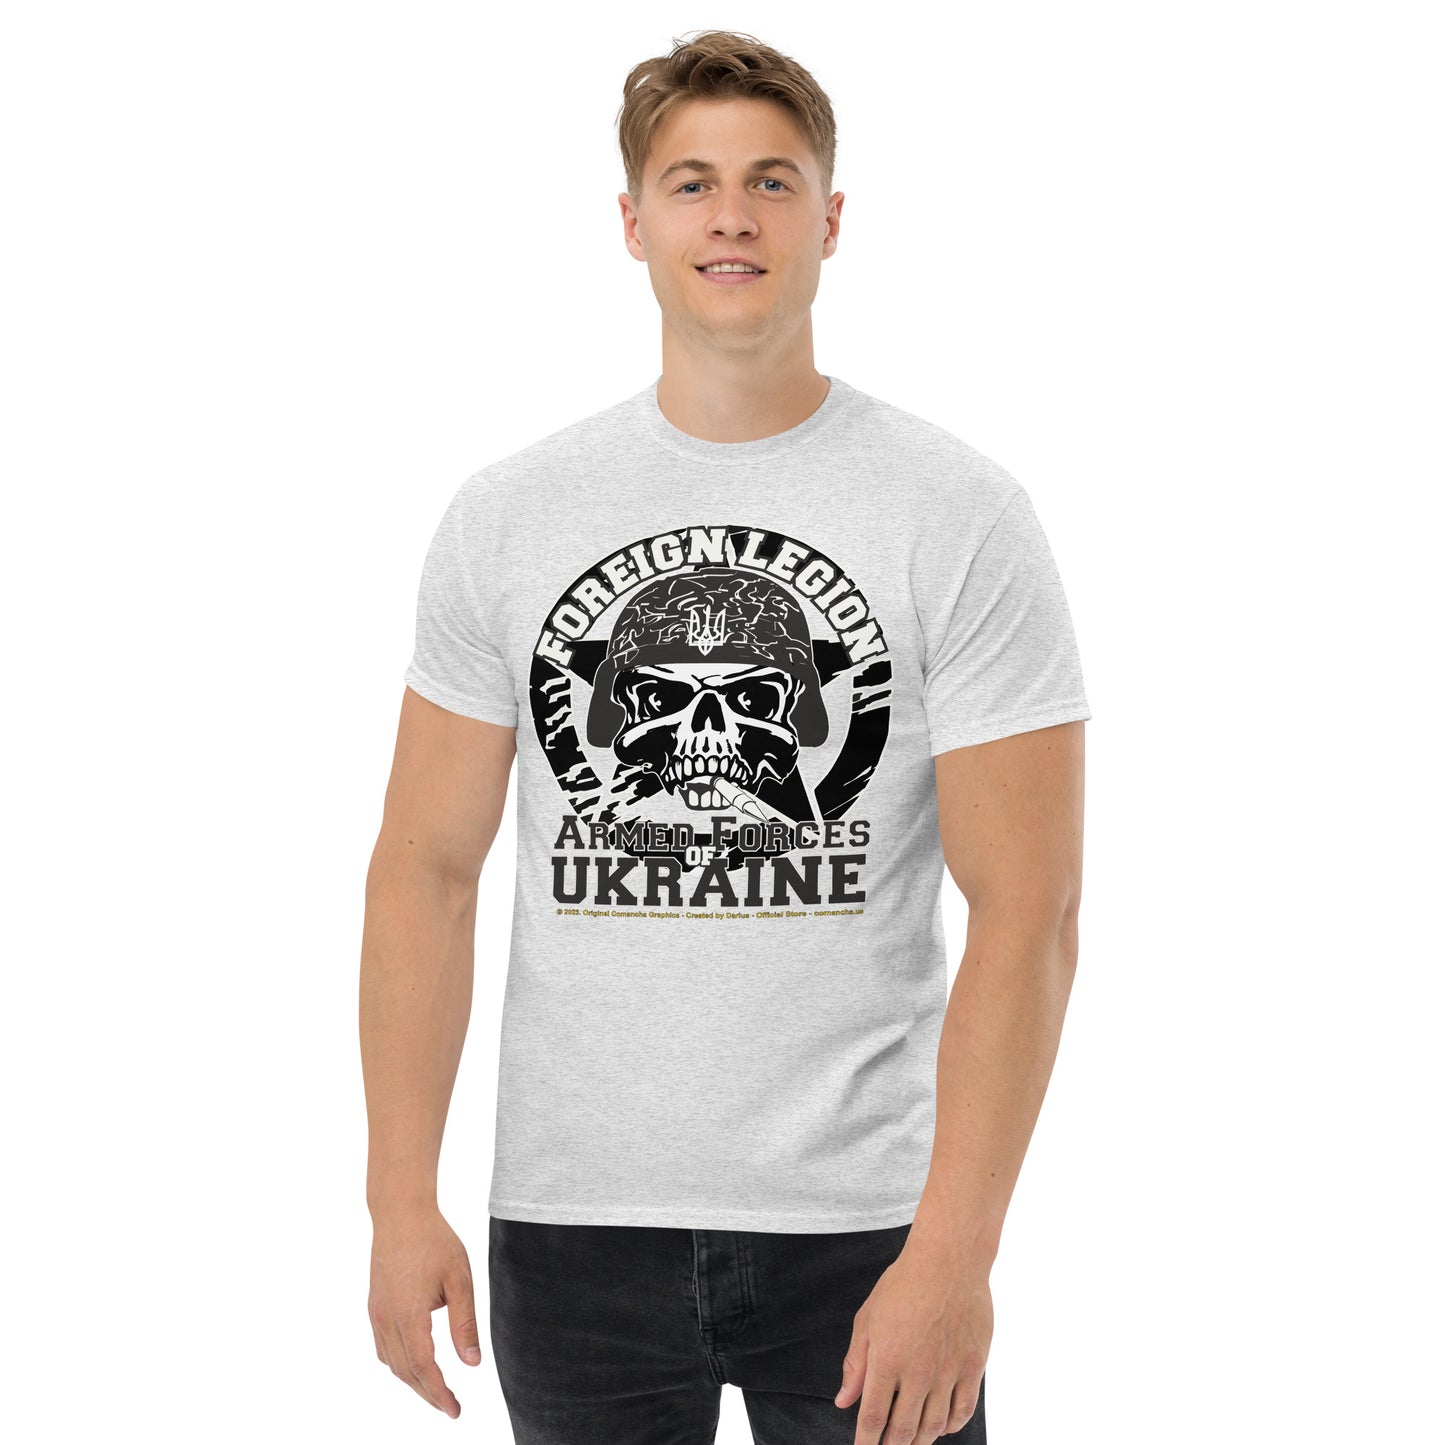 Foregin Legion T-shirt, Save Ukraine t-shirt